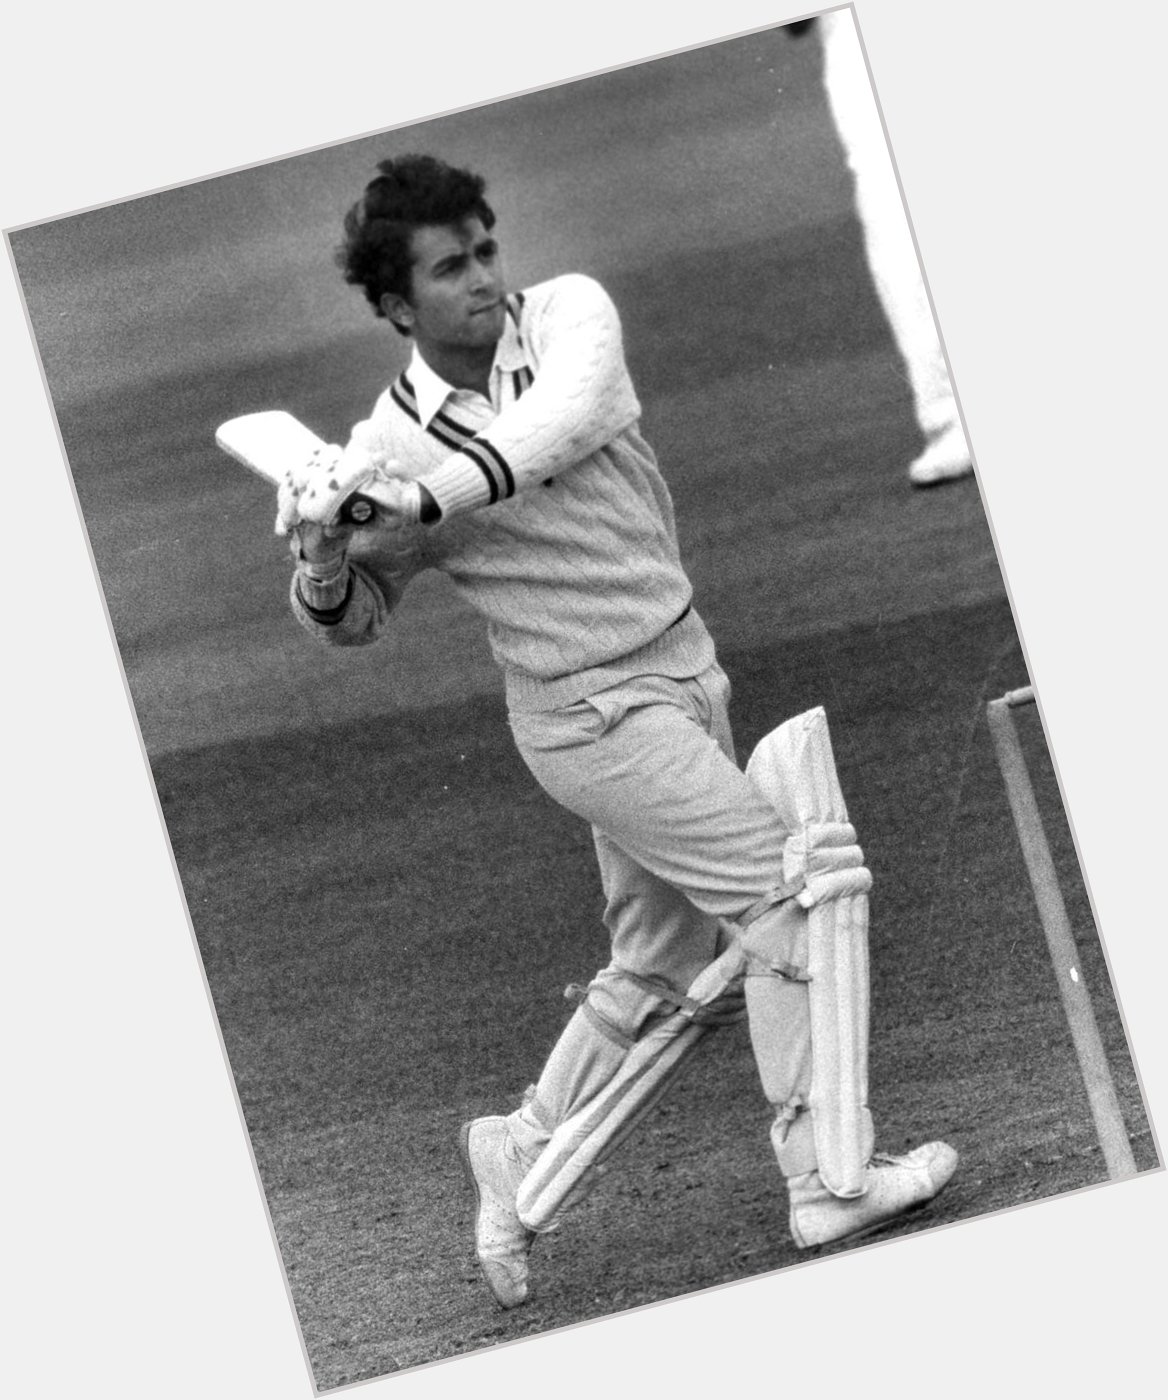 Wishing a very happy birthday to the legend Sunil Gavaskar - first man to score 10,000 runs in Test Cricket. 